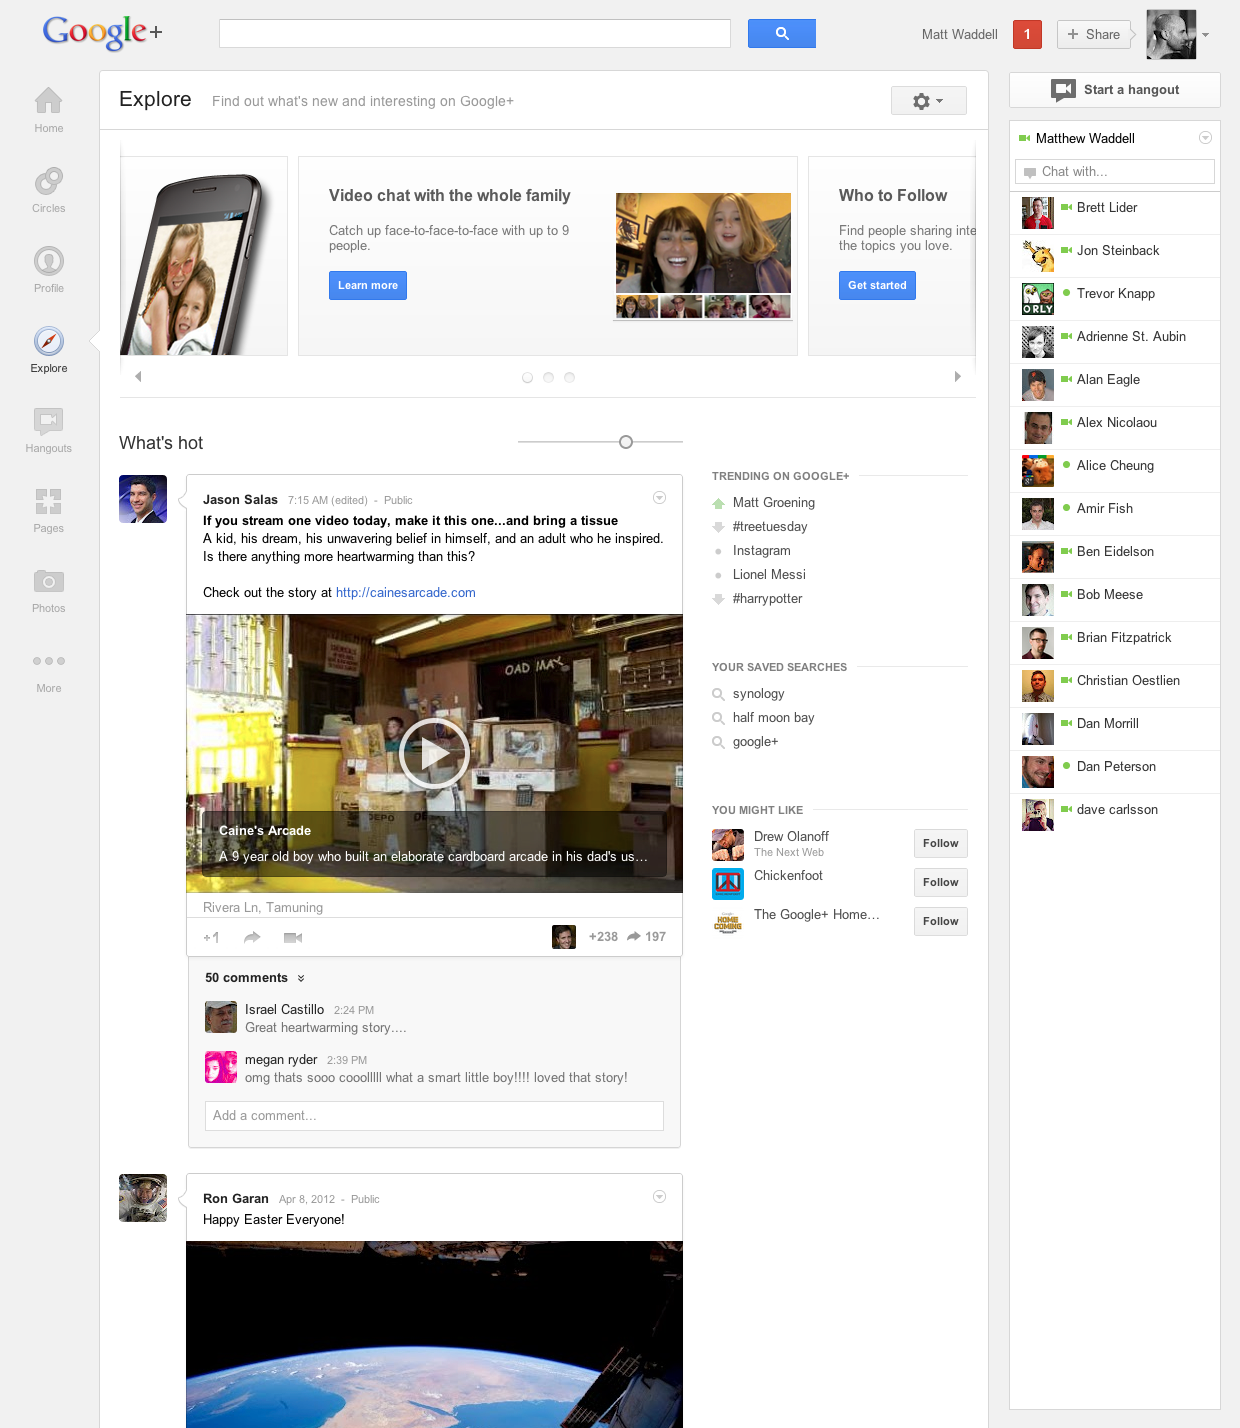 google+-interface-8